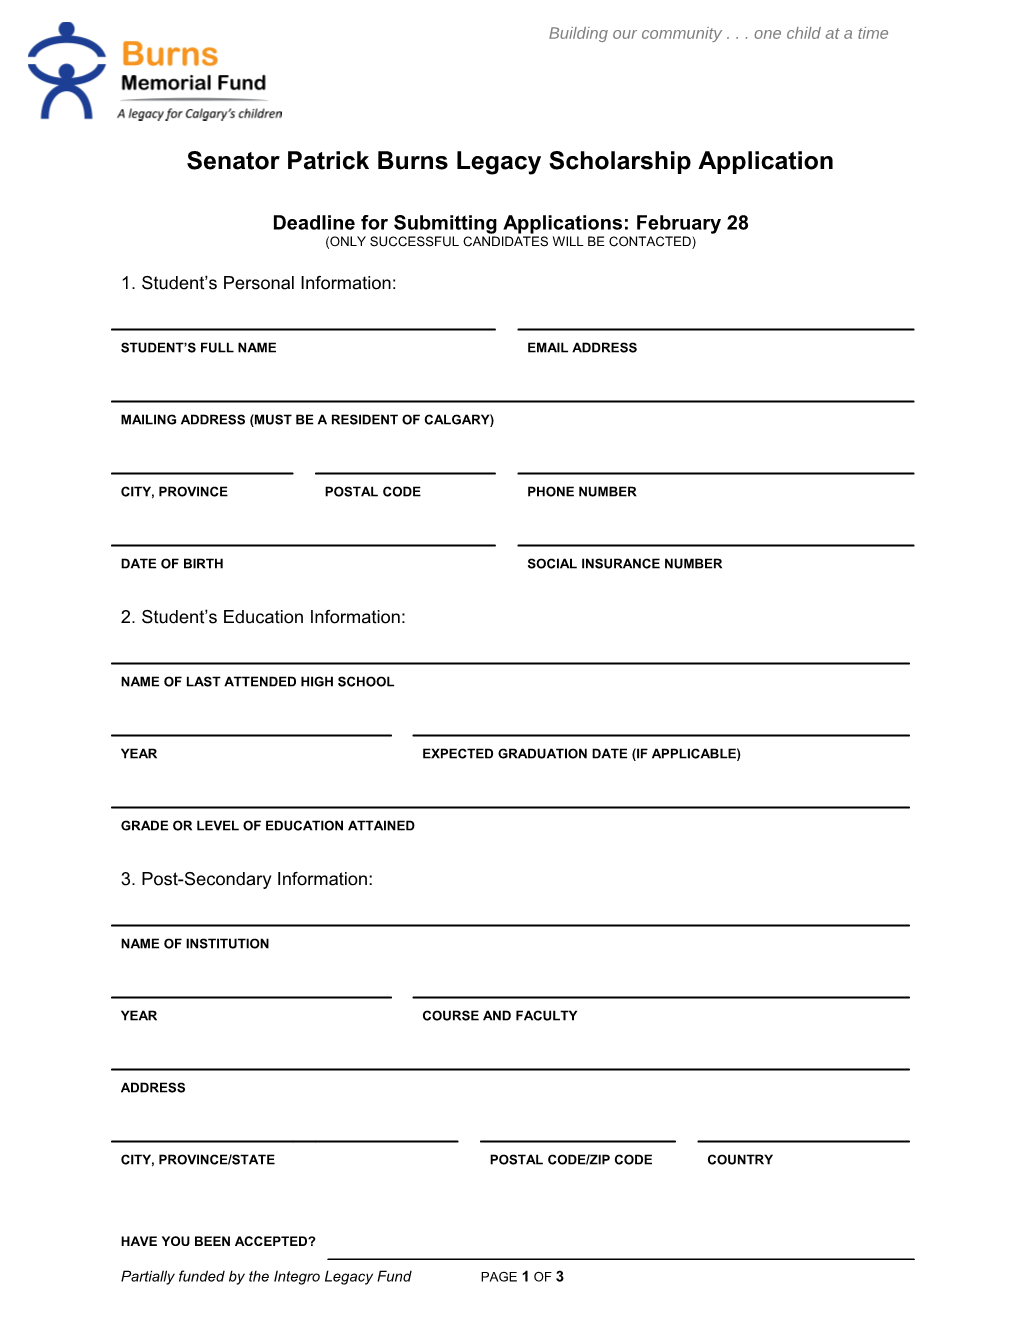 Senator Patrick Burns Legacy Scholarship Application